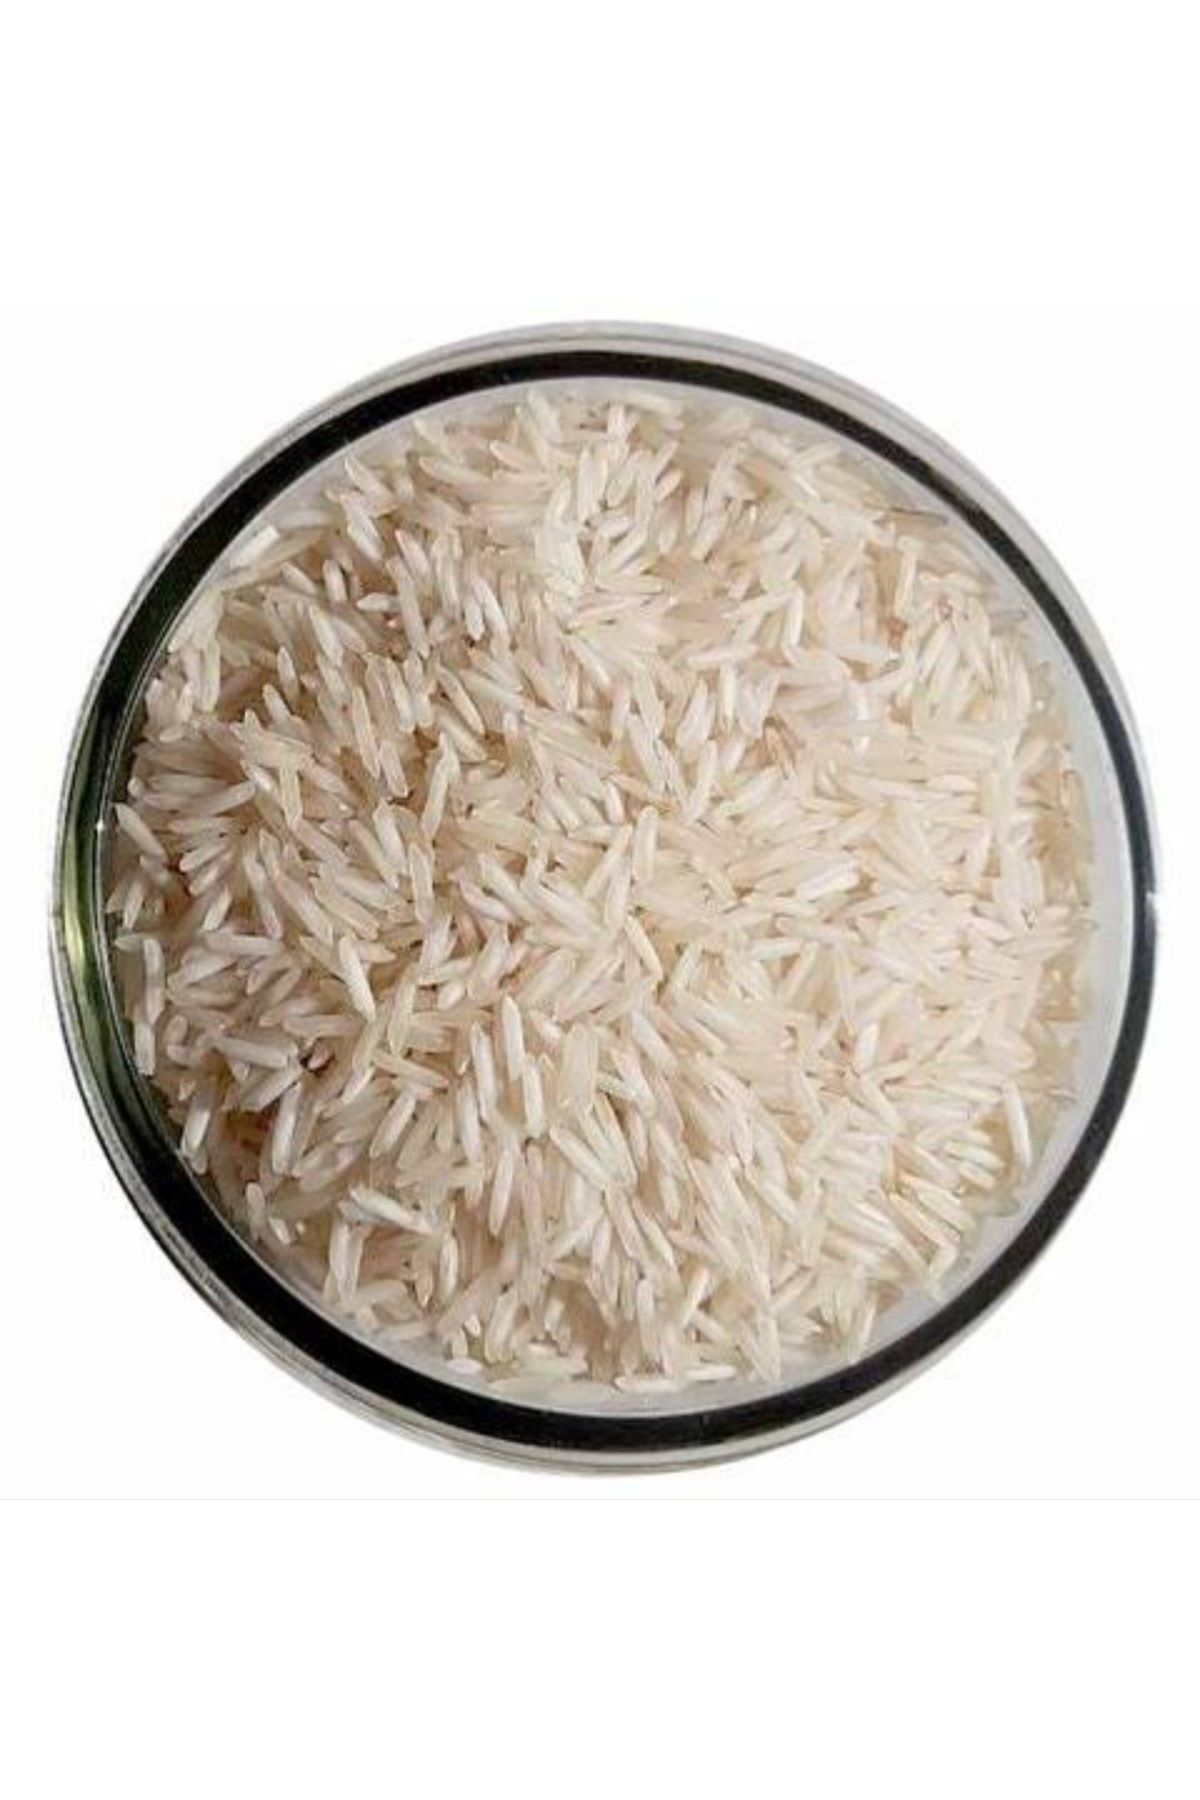 Loyal Uzun pirinç parboiled yapışmaz extra 1 kg